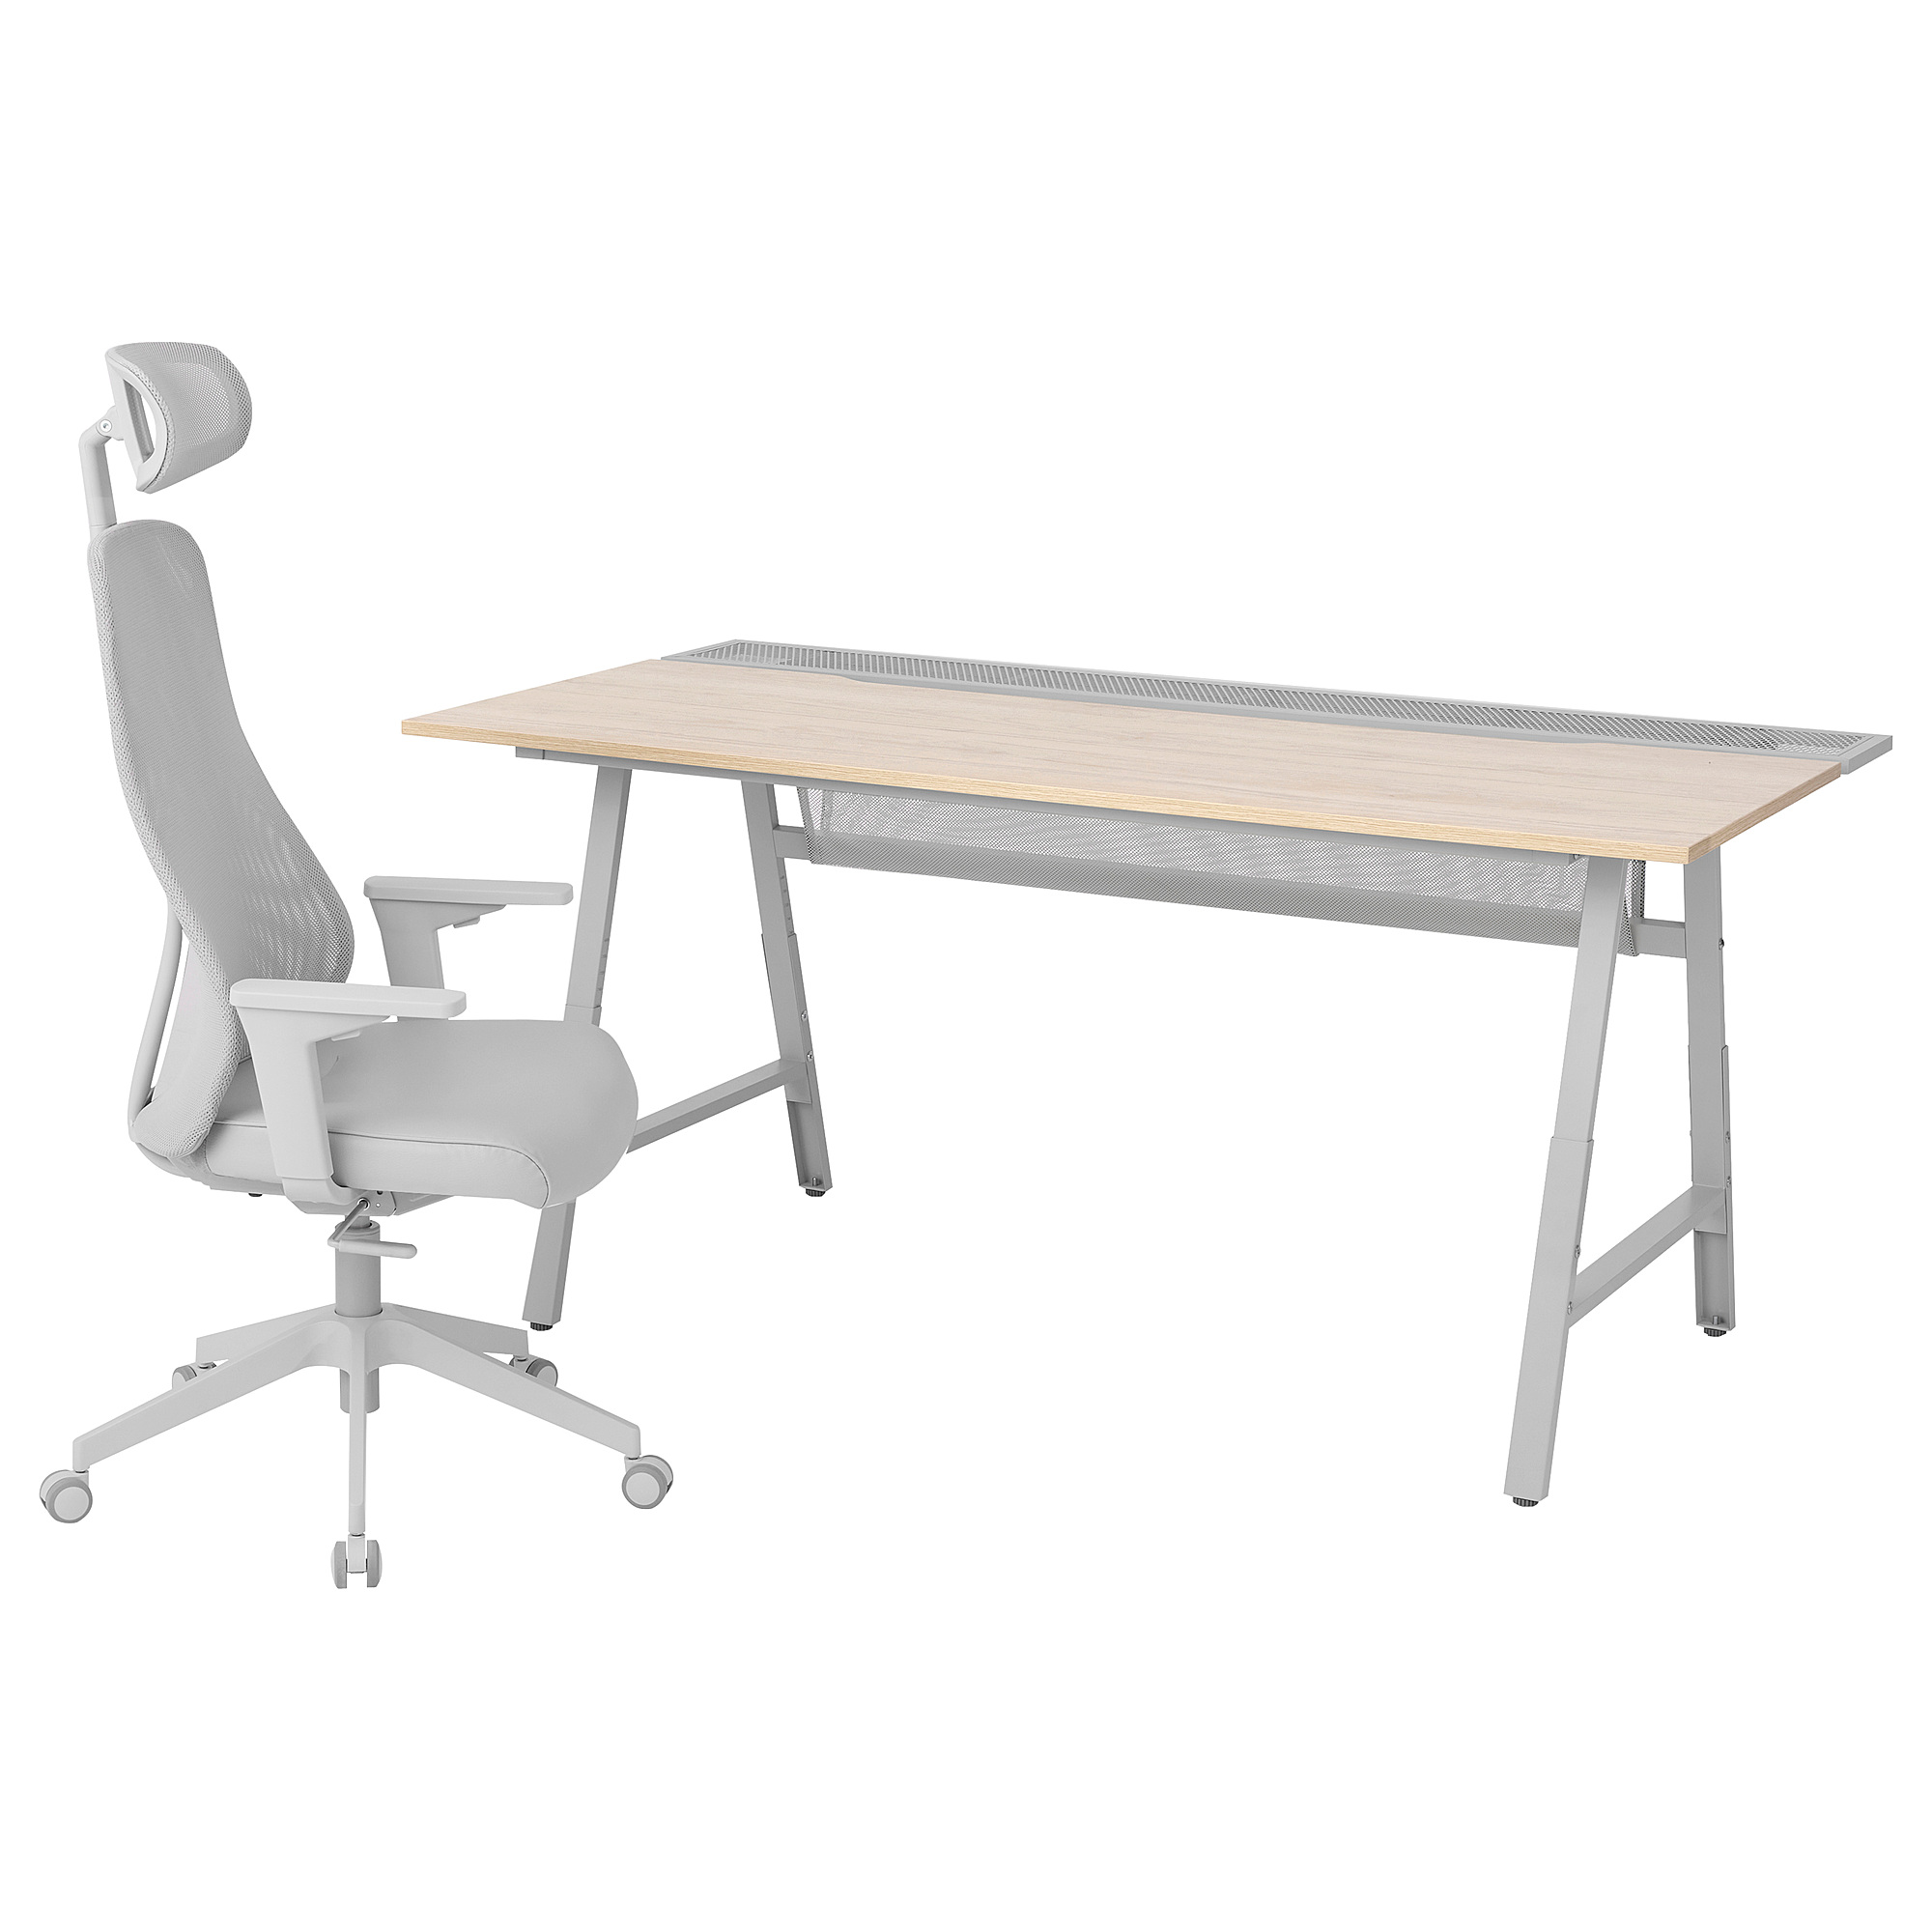 UTESPELARE/MATCHSPEL gaming desk and chair